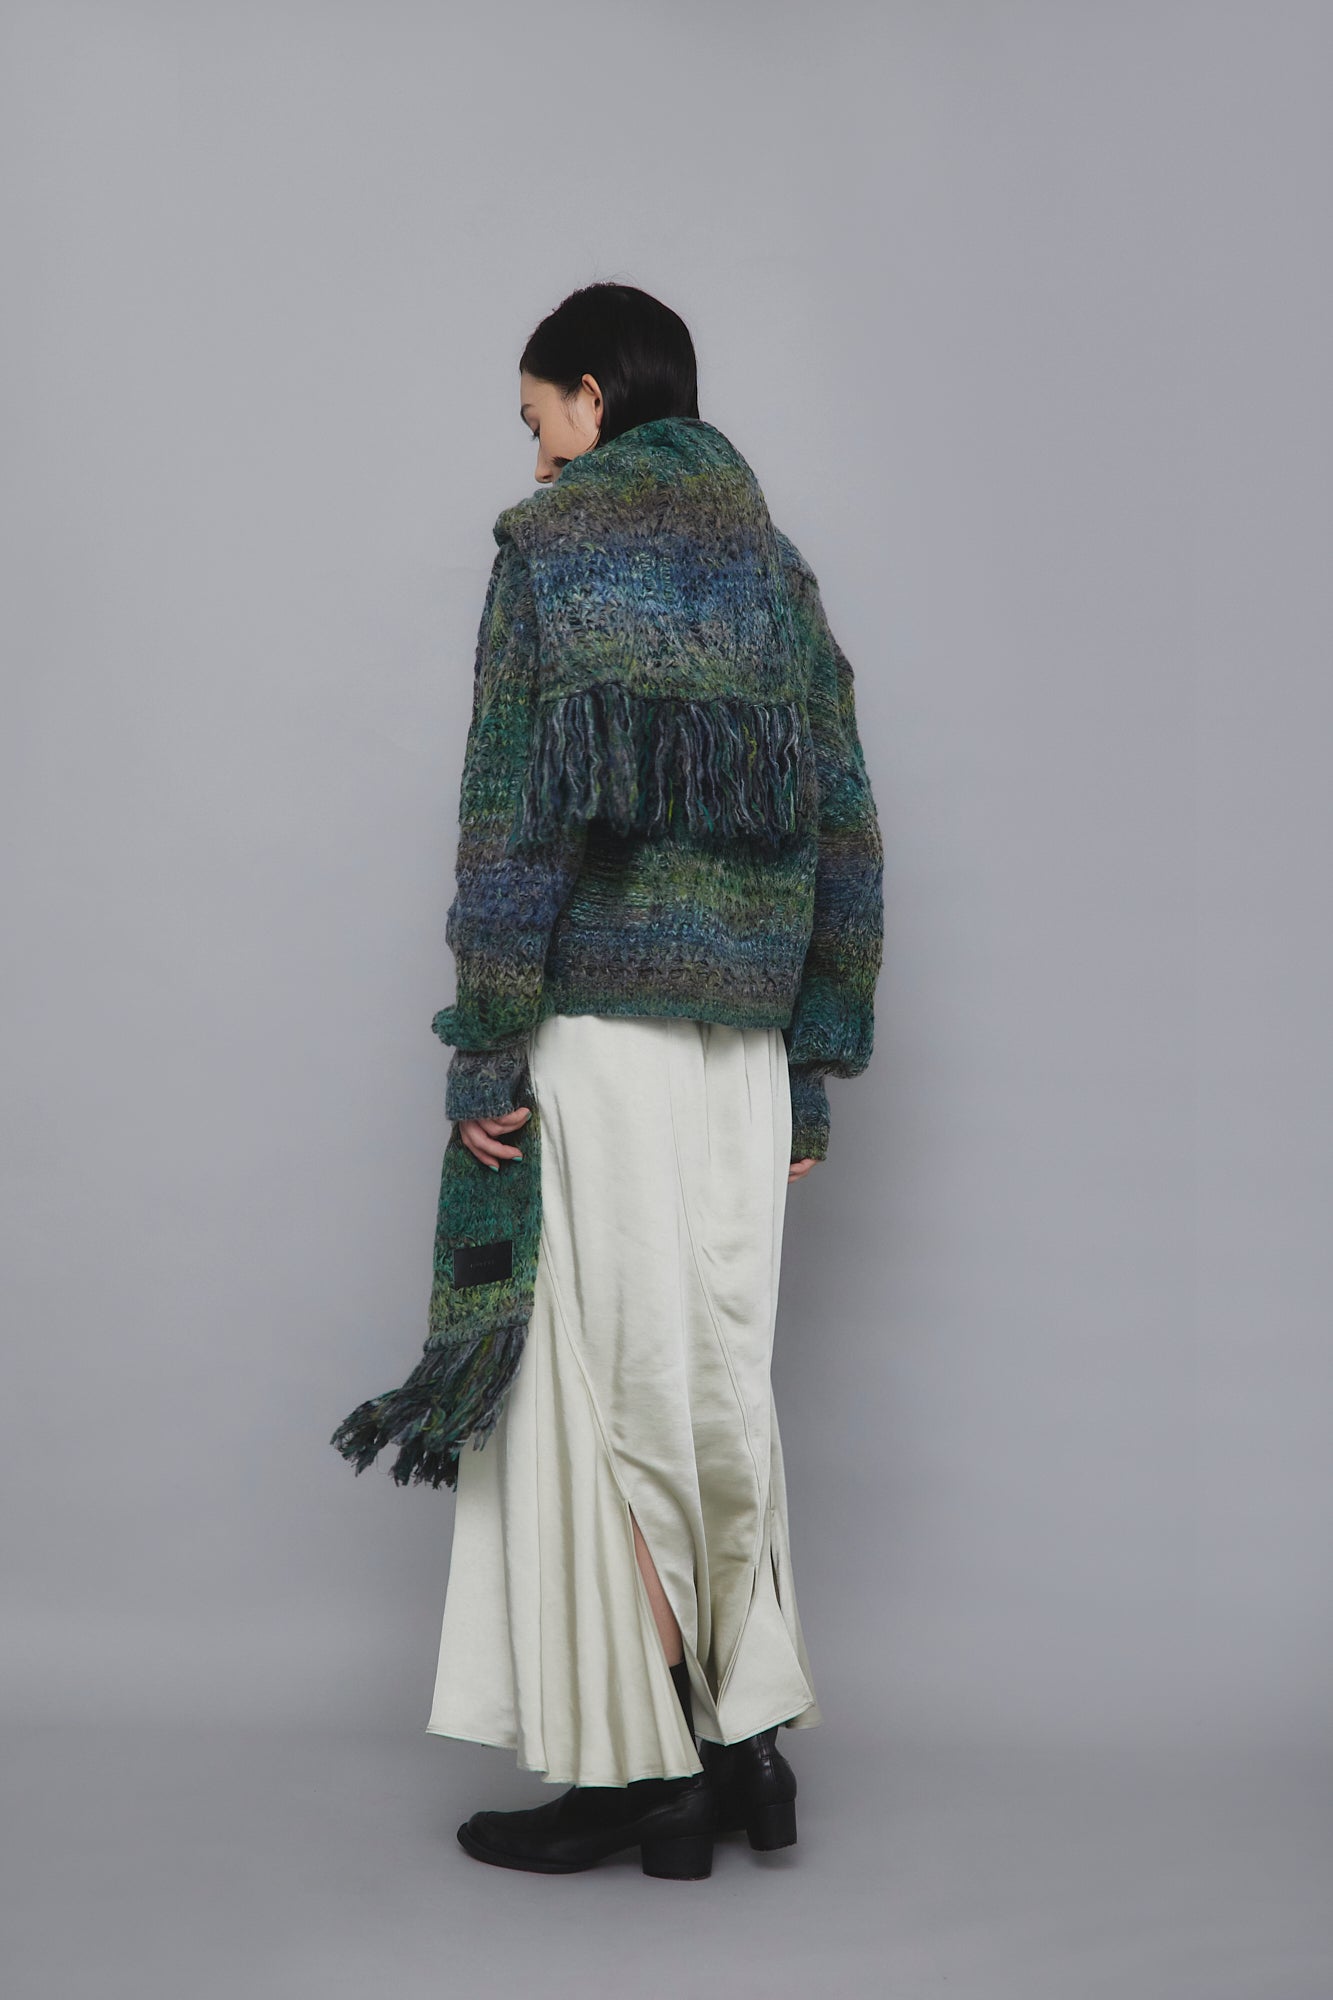 Hazy knit Scarf (Green)